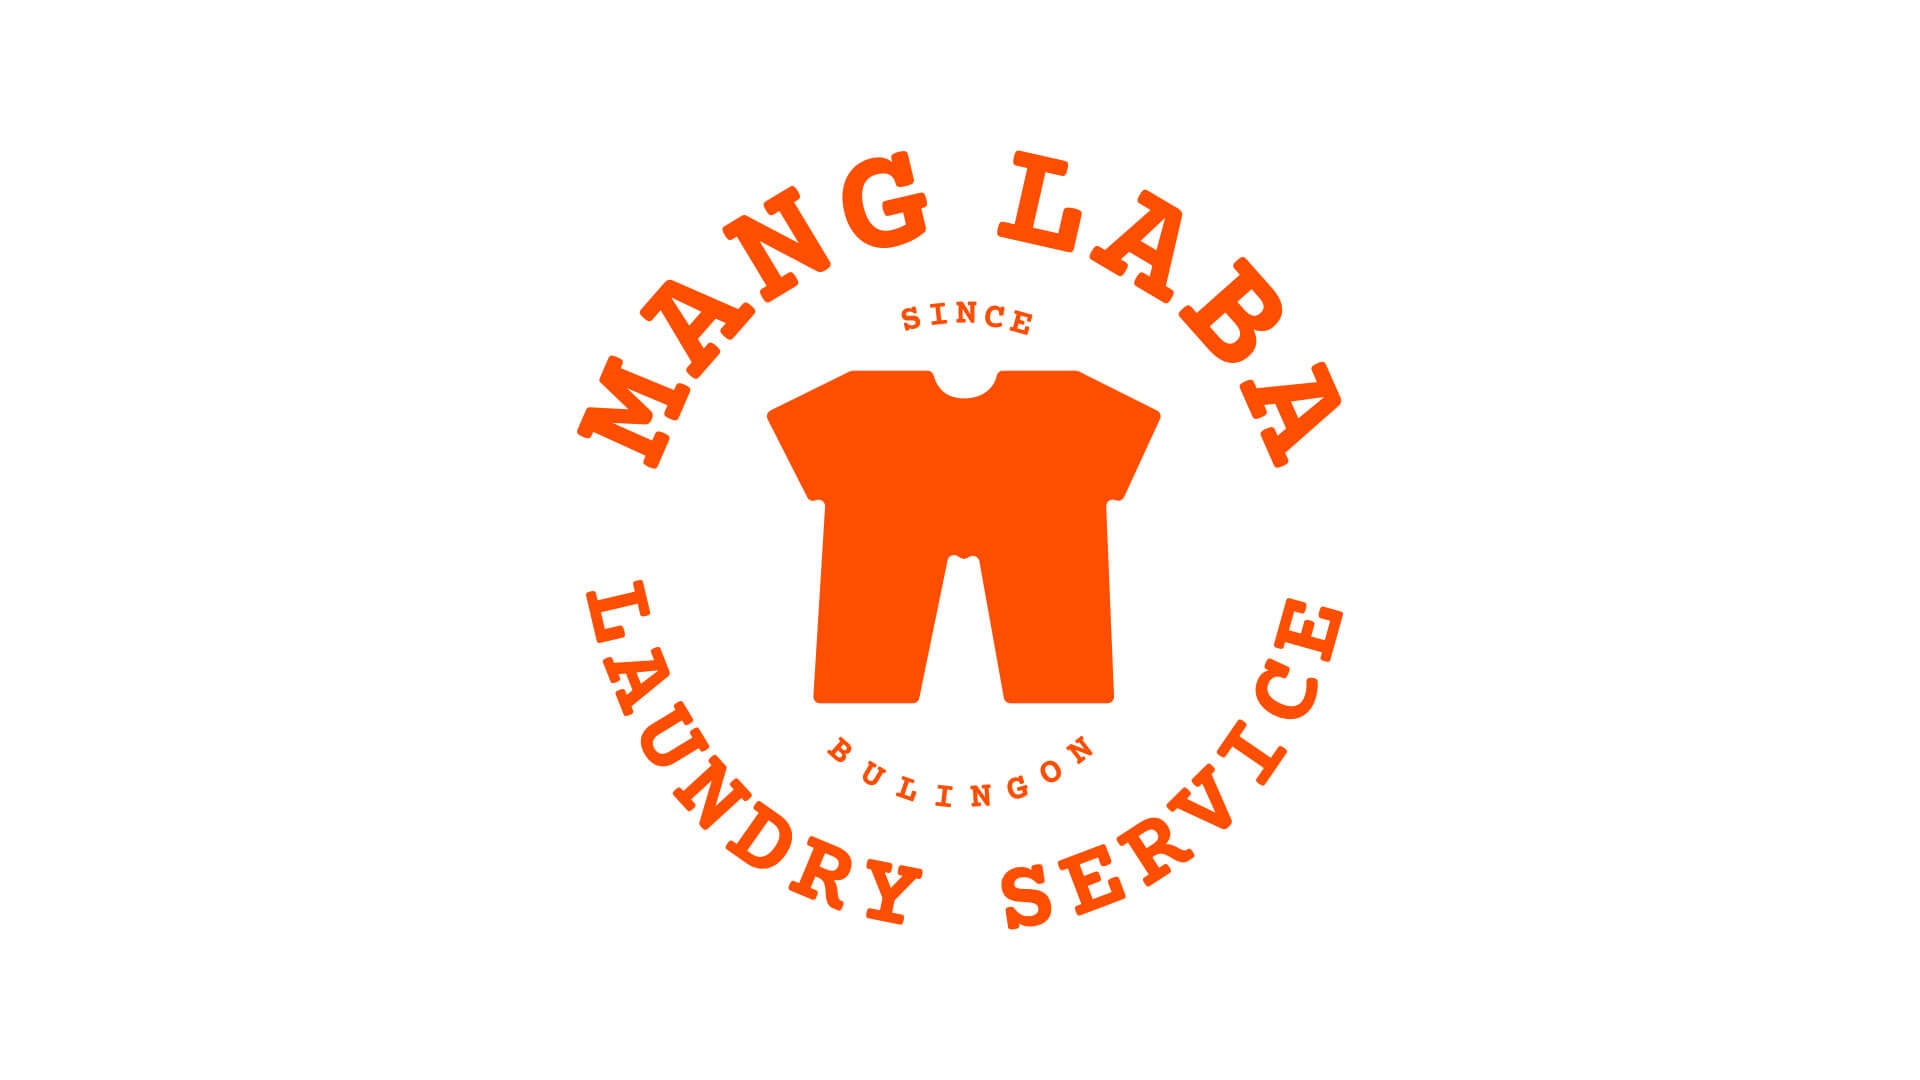 Manglaba Laundry Service - logo only